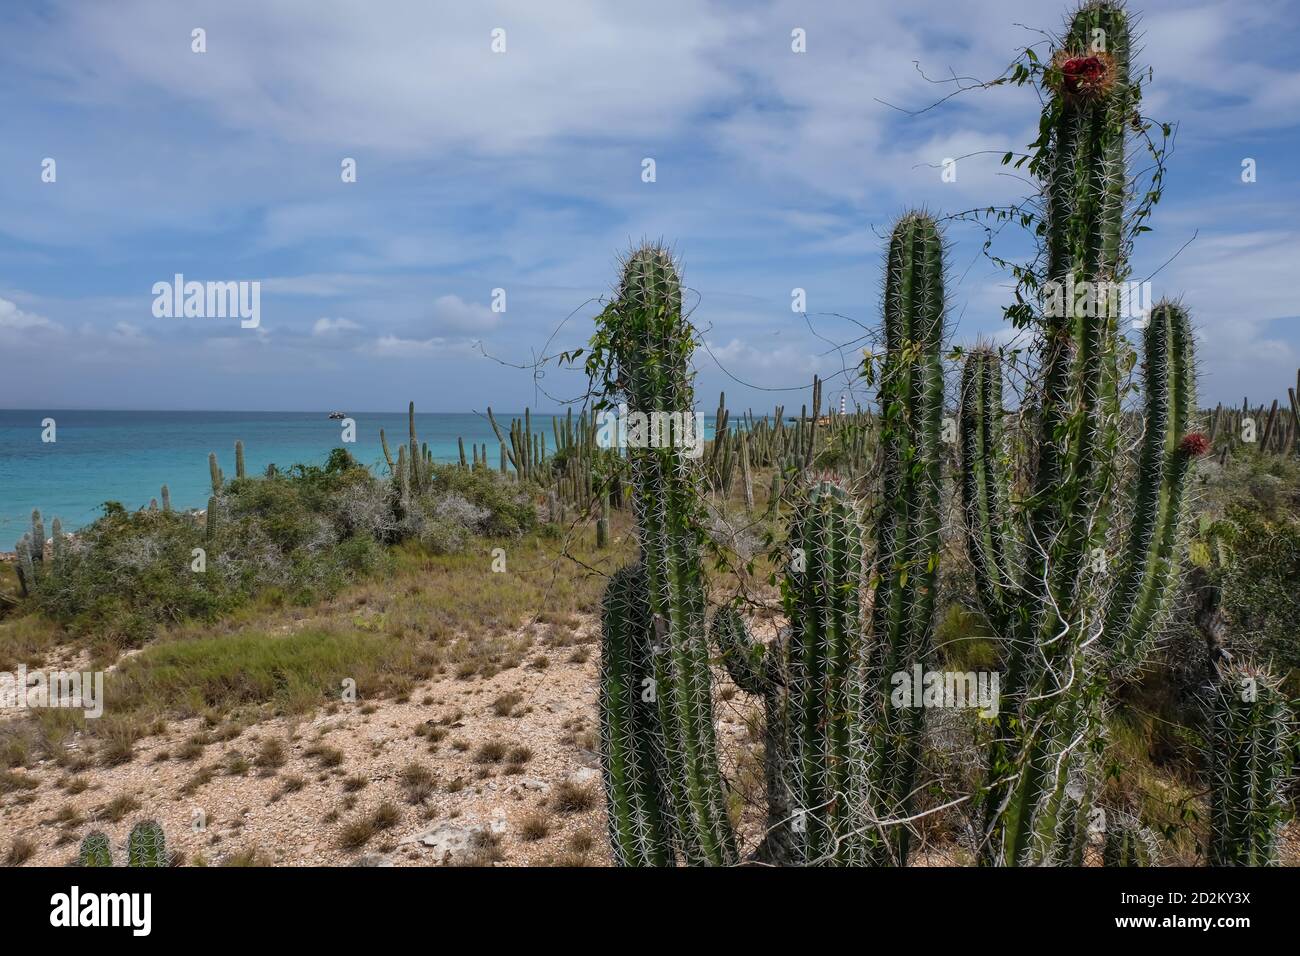 Tropical seascape with cactus in Cubagua island (Venezuela). Stock Photo